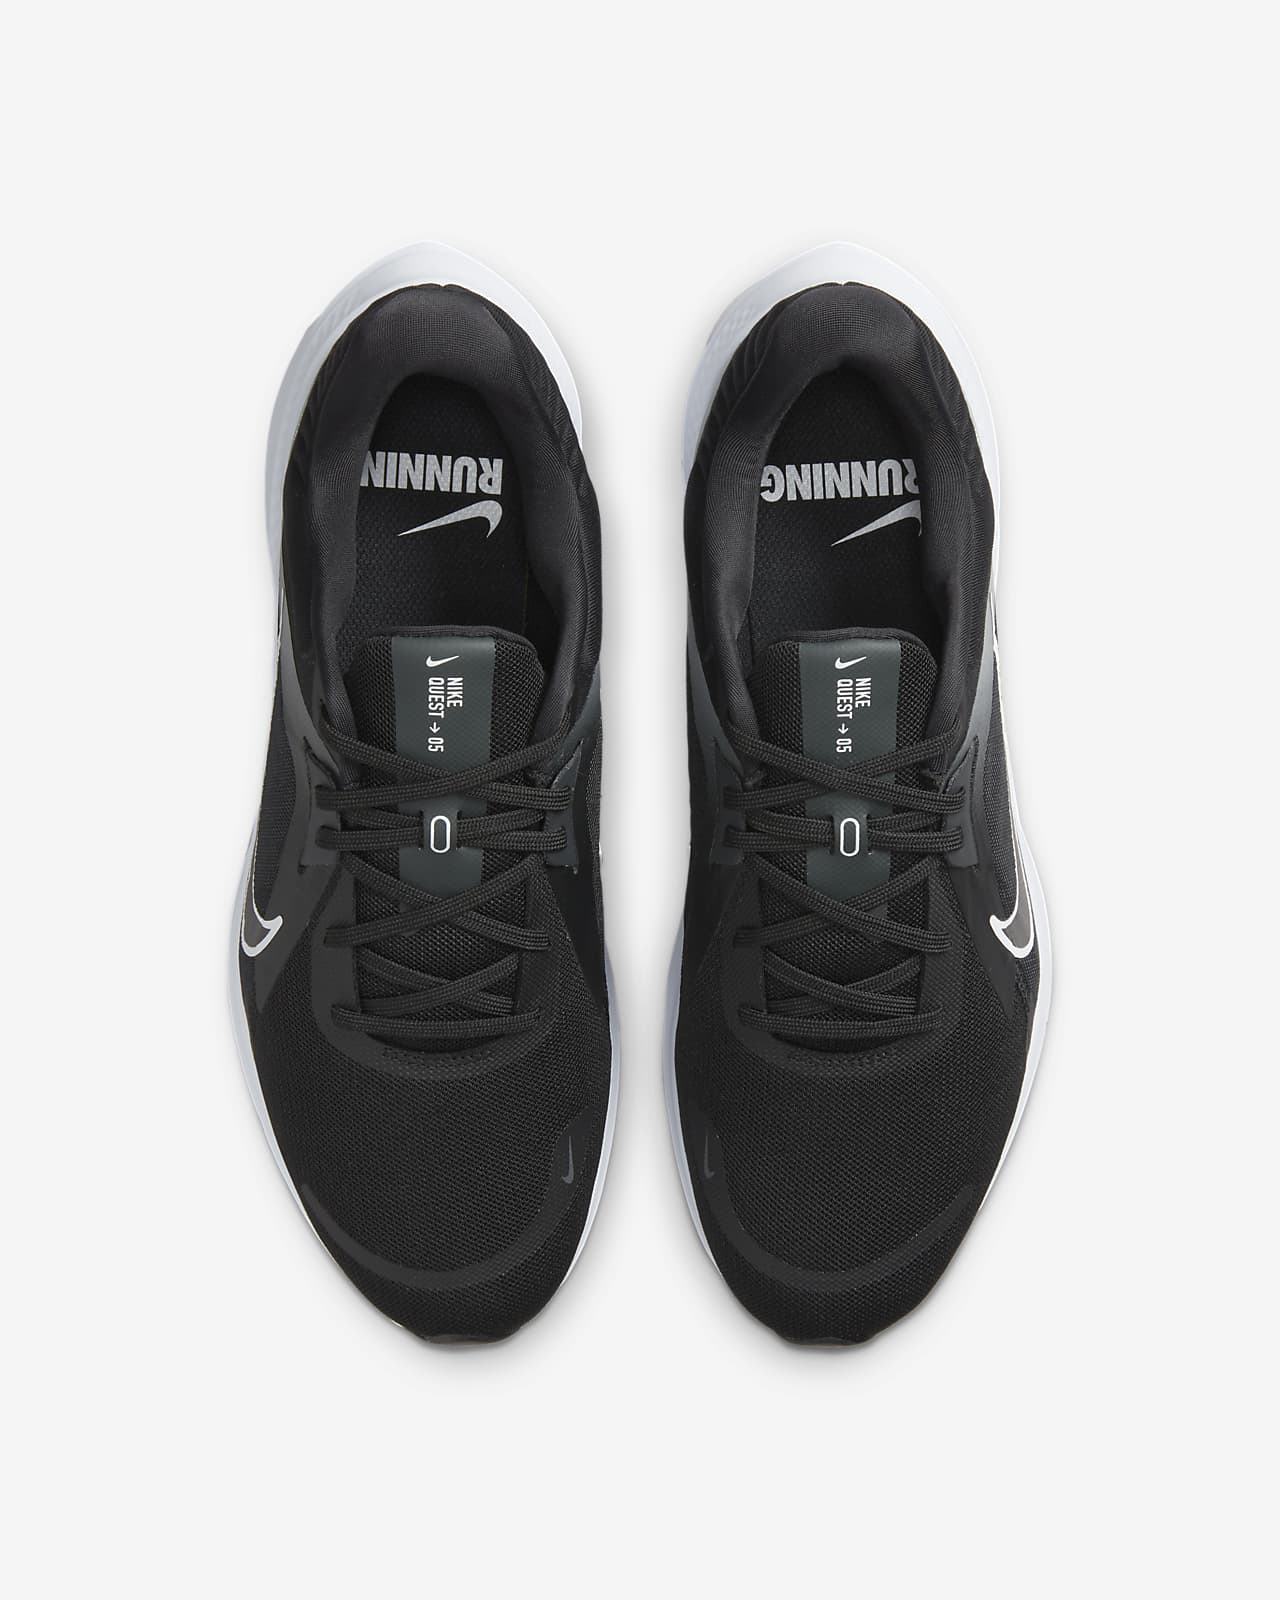 nike 5.0 running shoes